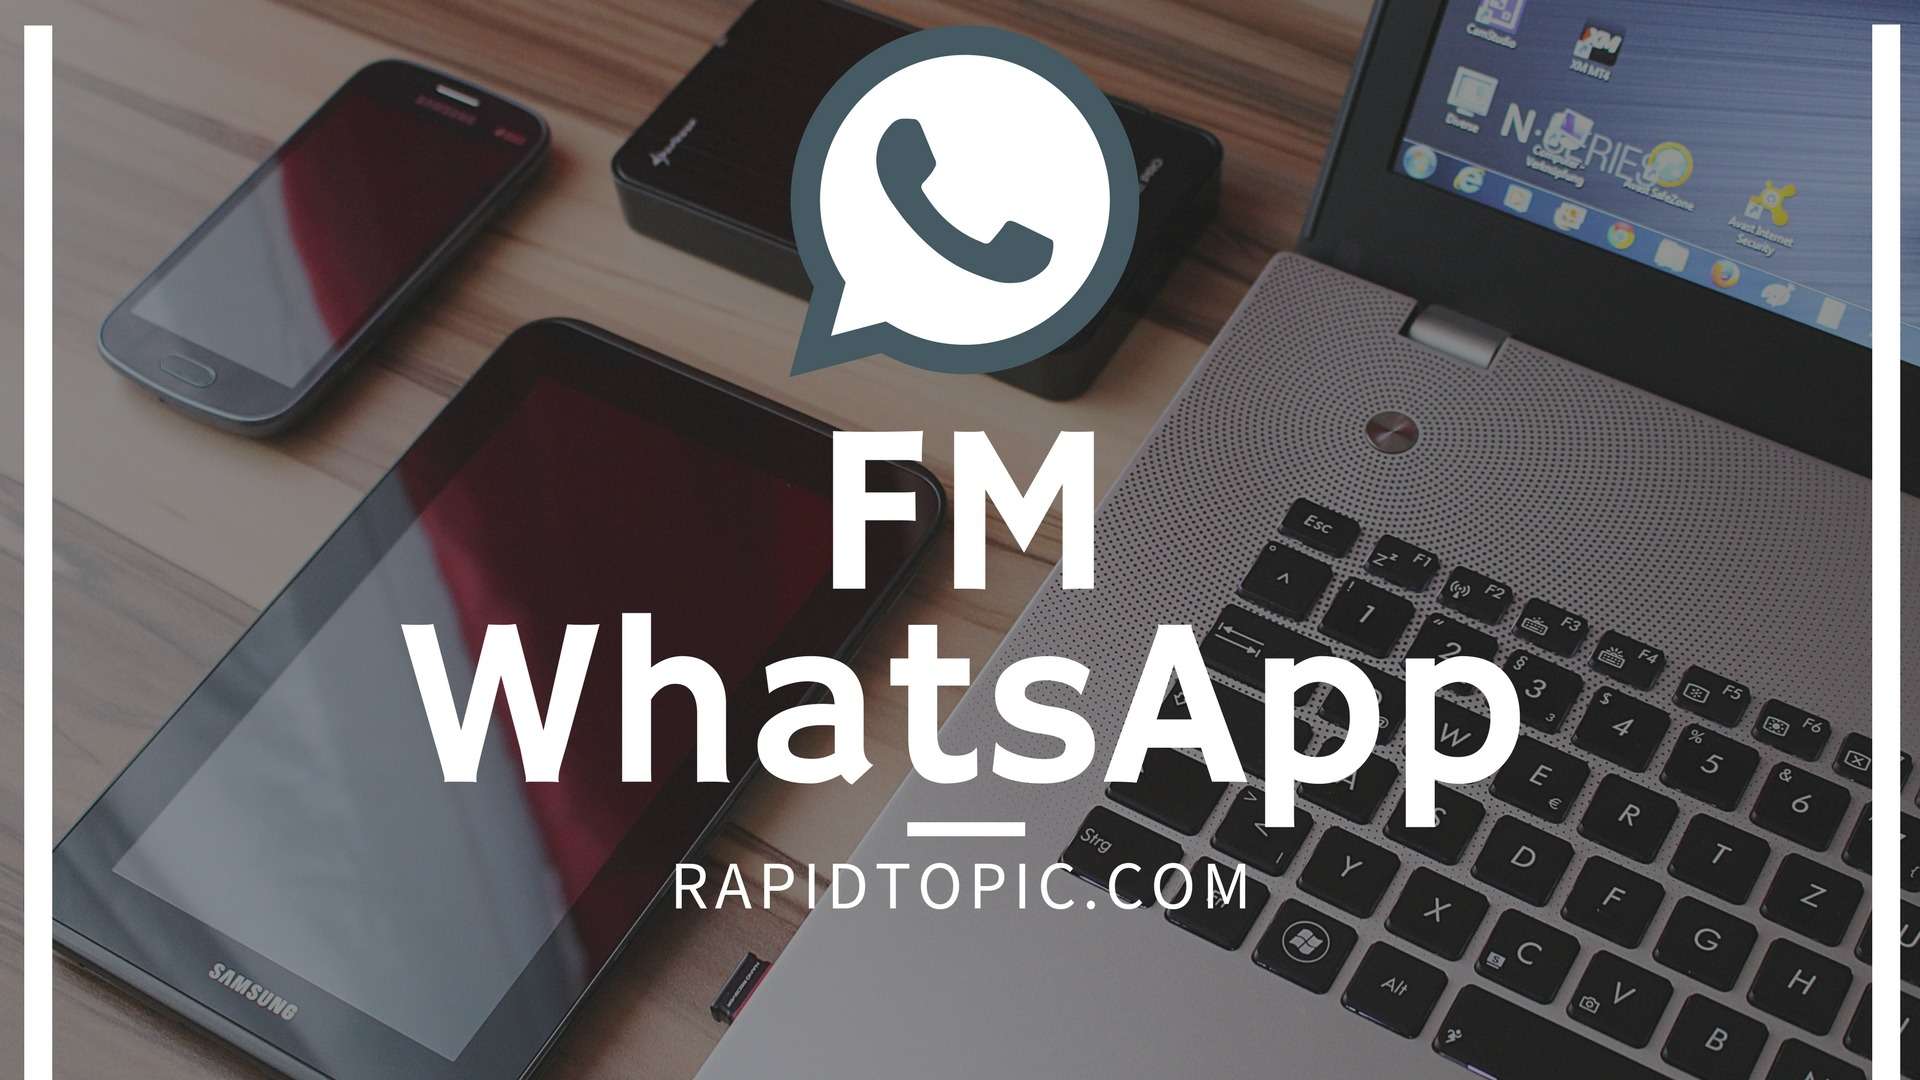 FM whatsapp apk moded